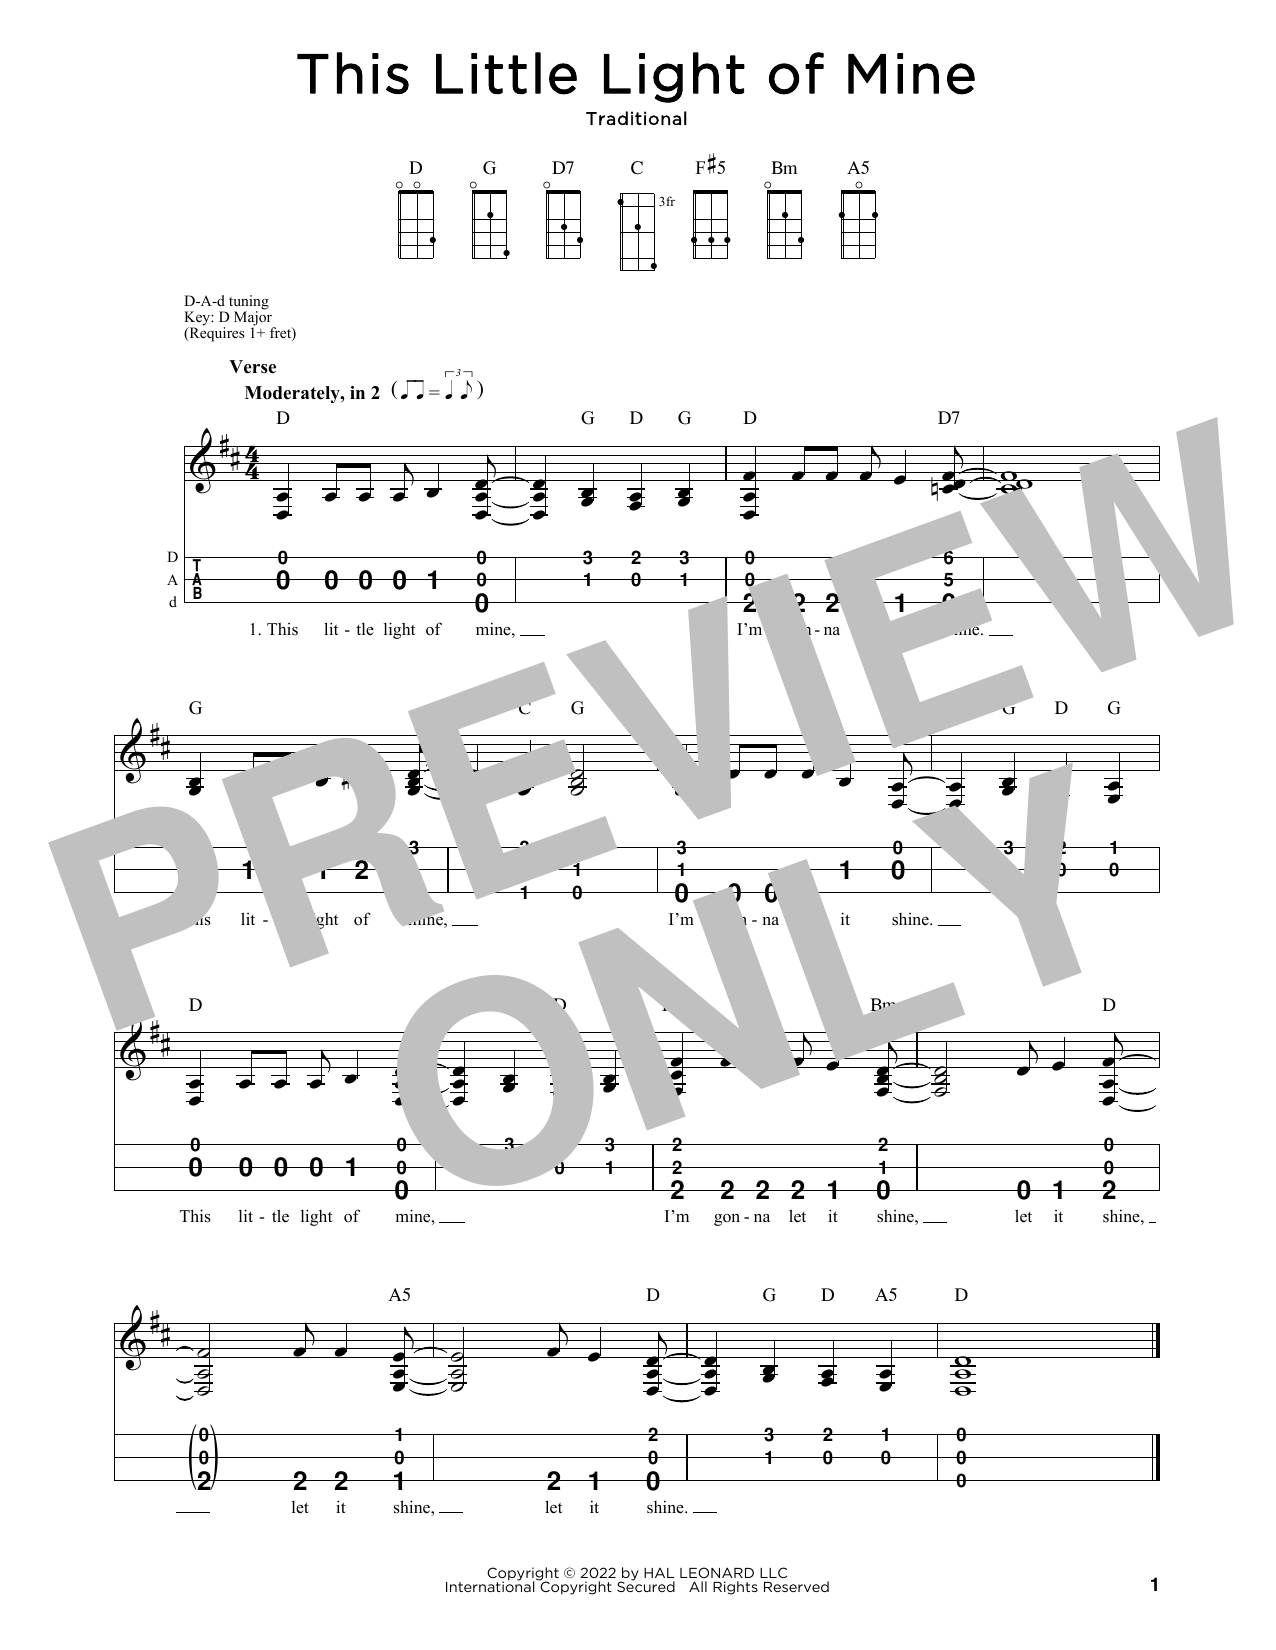 Traditional This Little Light Of Mine (arr. Steven B. Eulberg) Sheet Music Notes & Chords for Dulcimer - Download or Print PDF